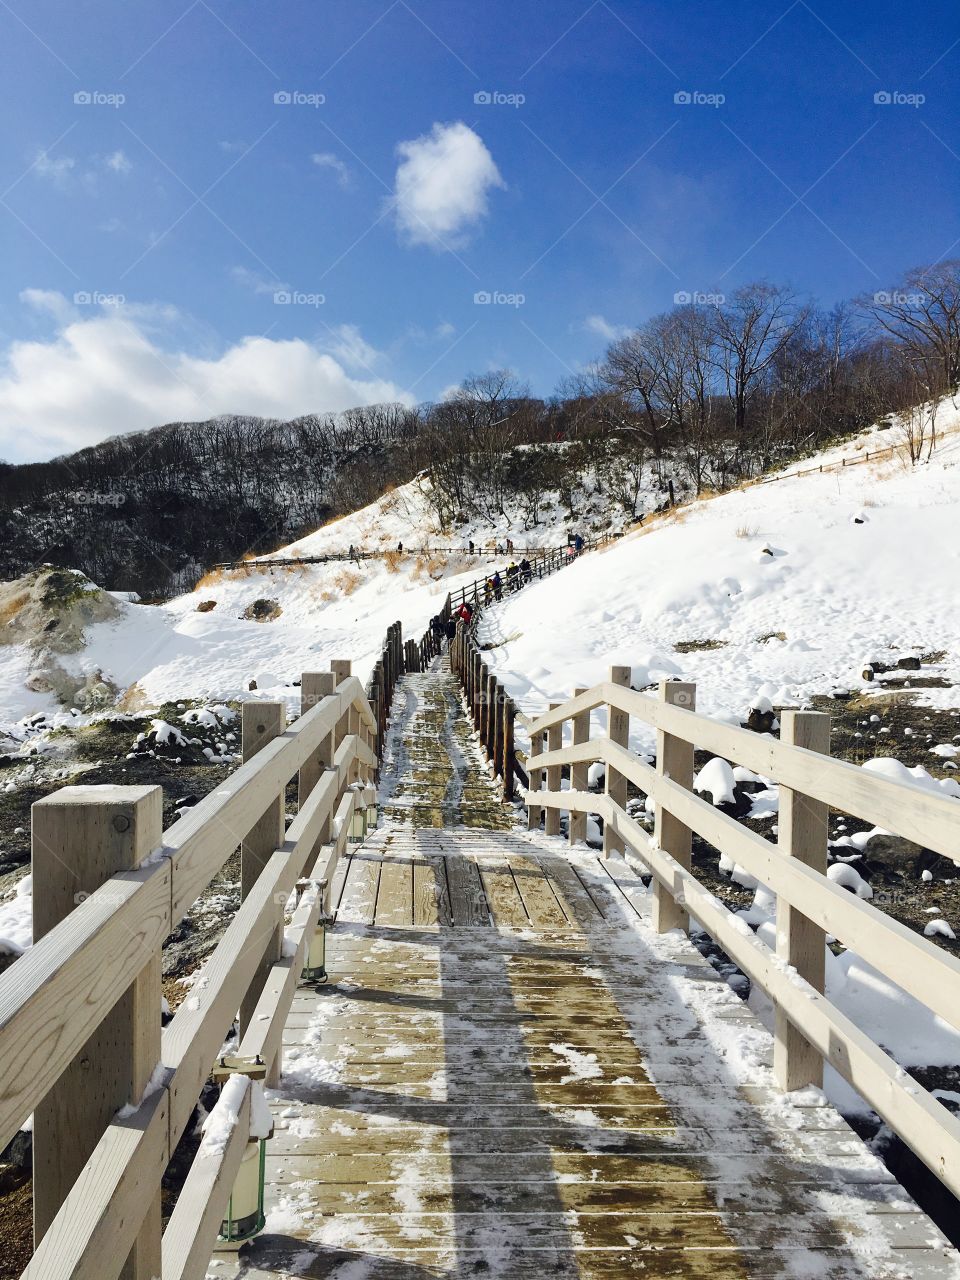 Wooden bridge and Snow mountains at noboribetsu, hokkaido, japan